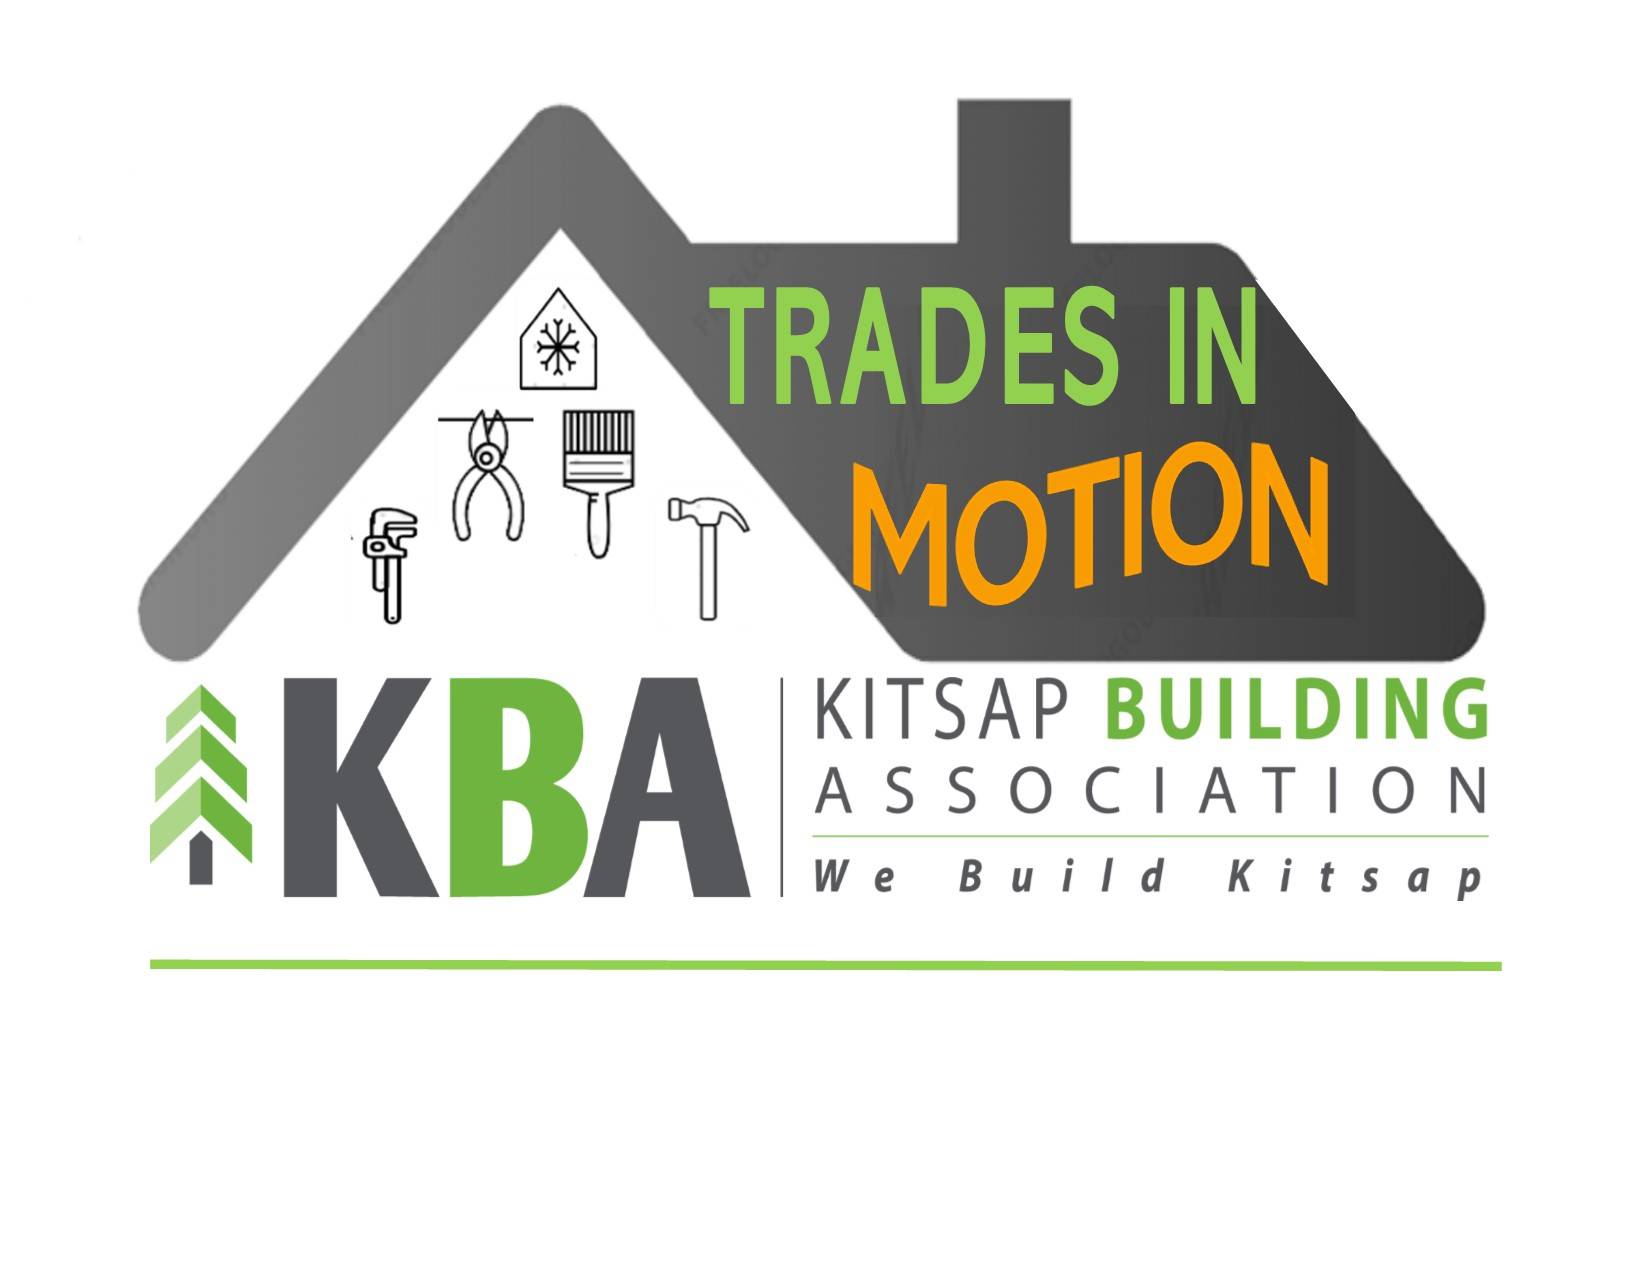 KBA partnership will introduce kids to construction trades